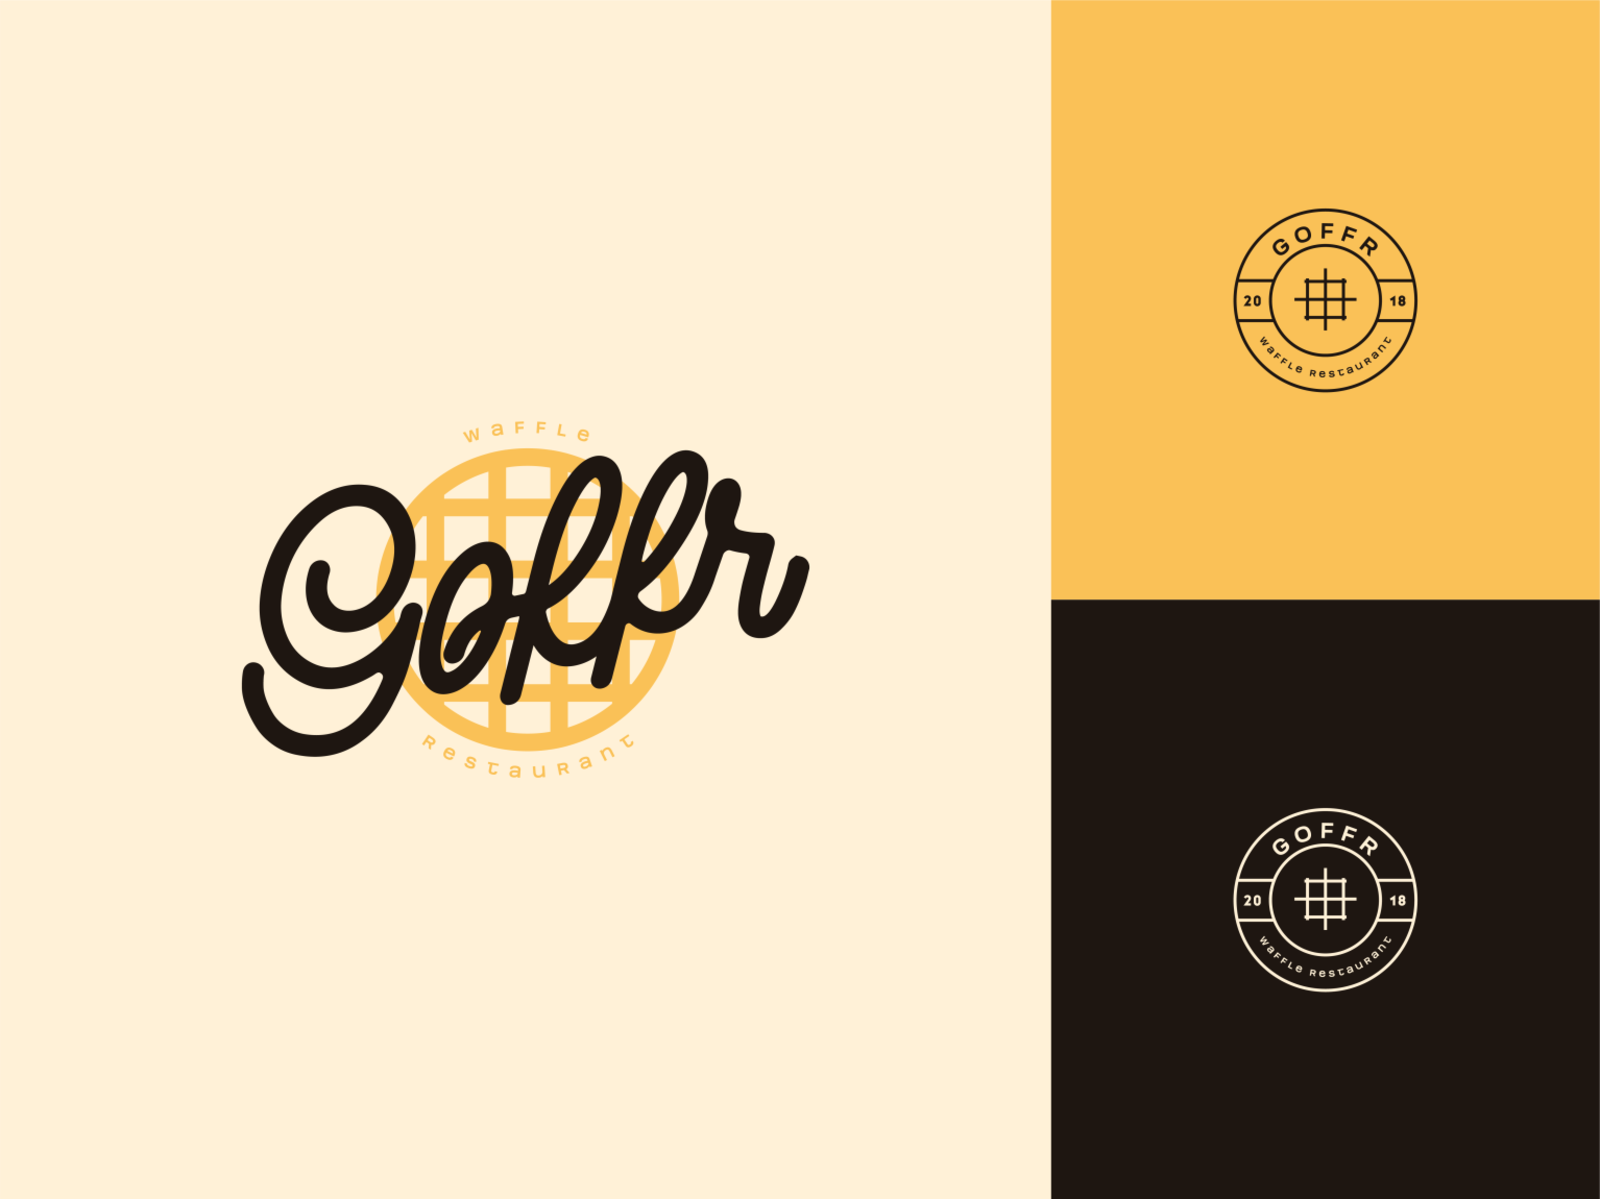 Goffr - Restaurant Branding - Logo Design by Théau Delaroche on Dribbble